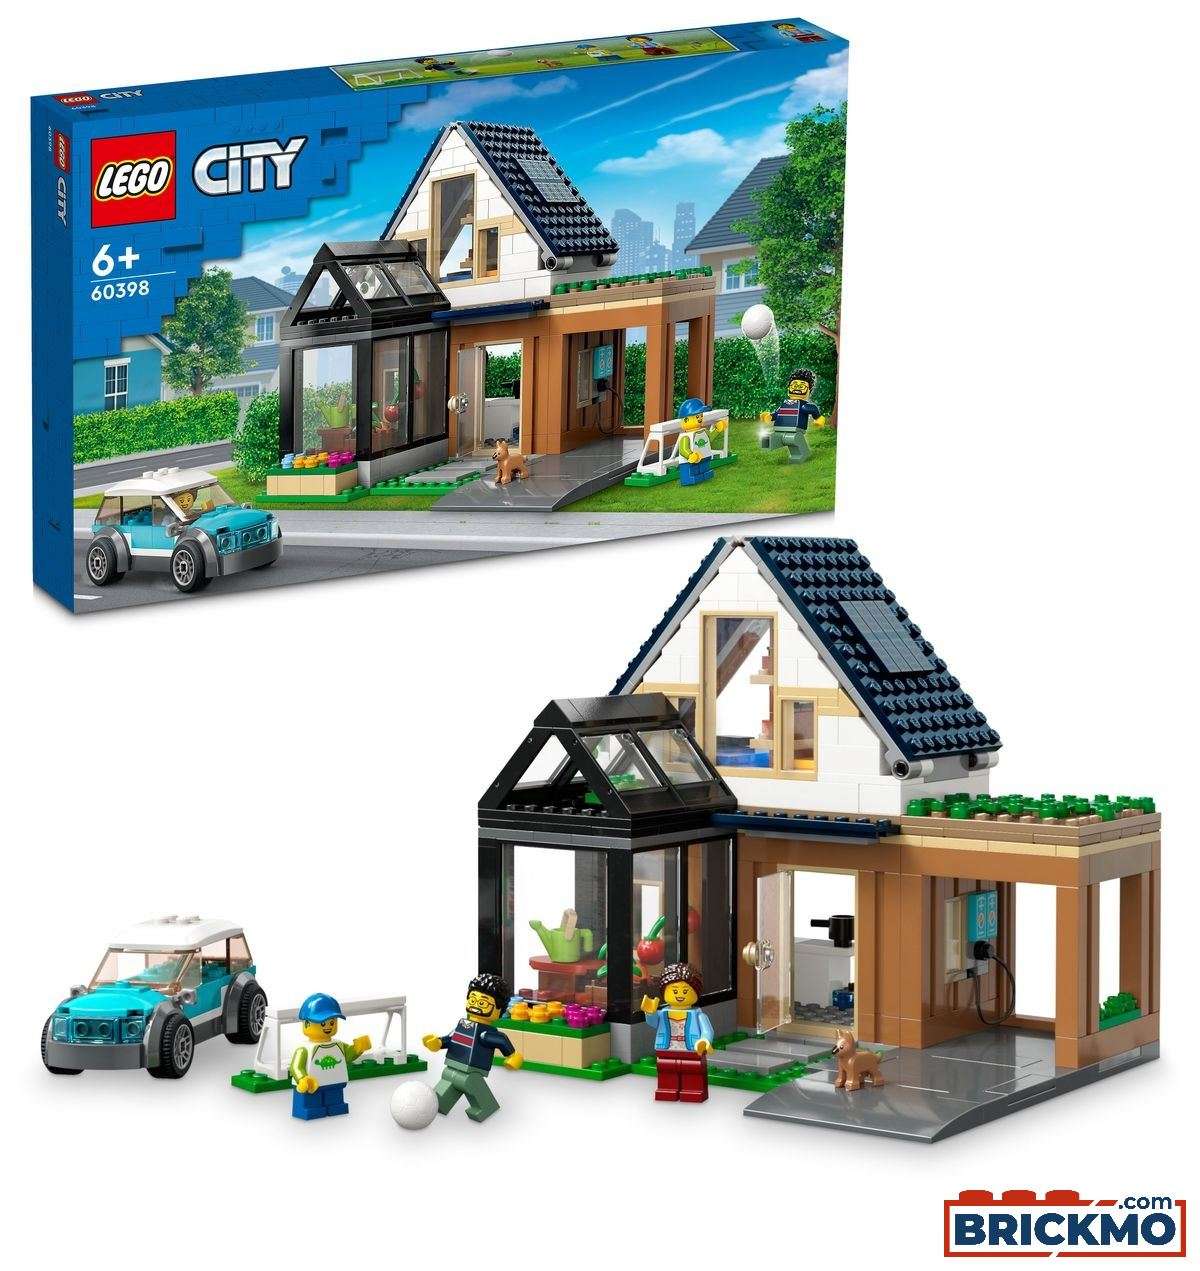 LEGO City 60398 Familienhaus mit Elektroauto 60398